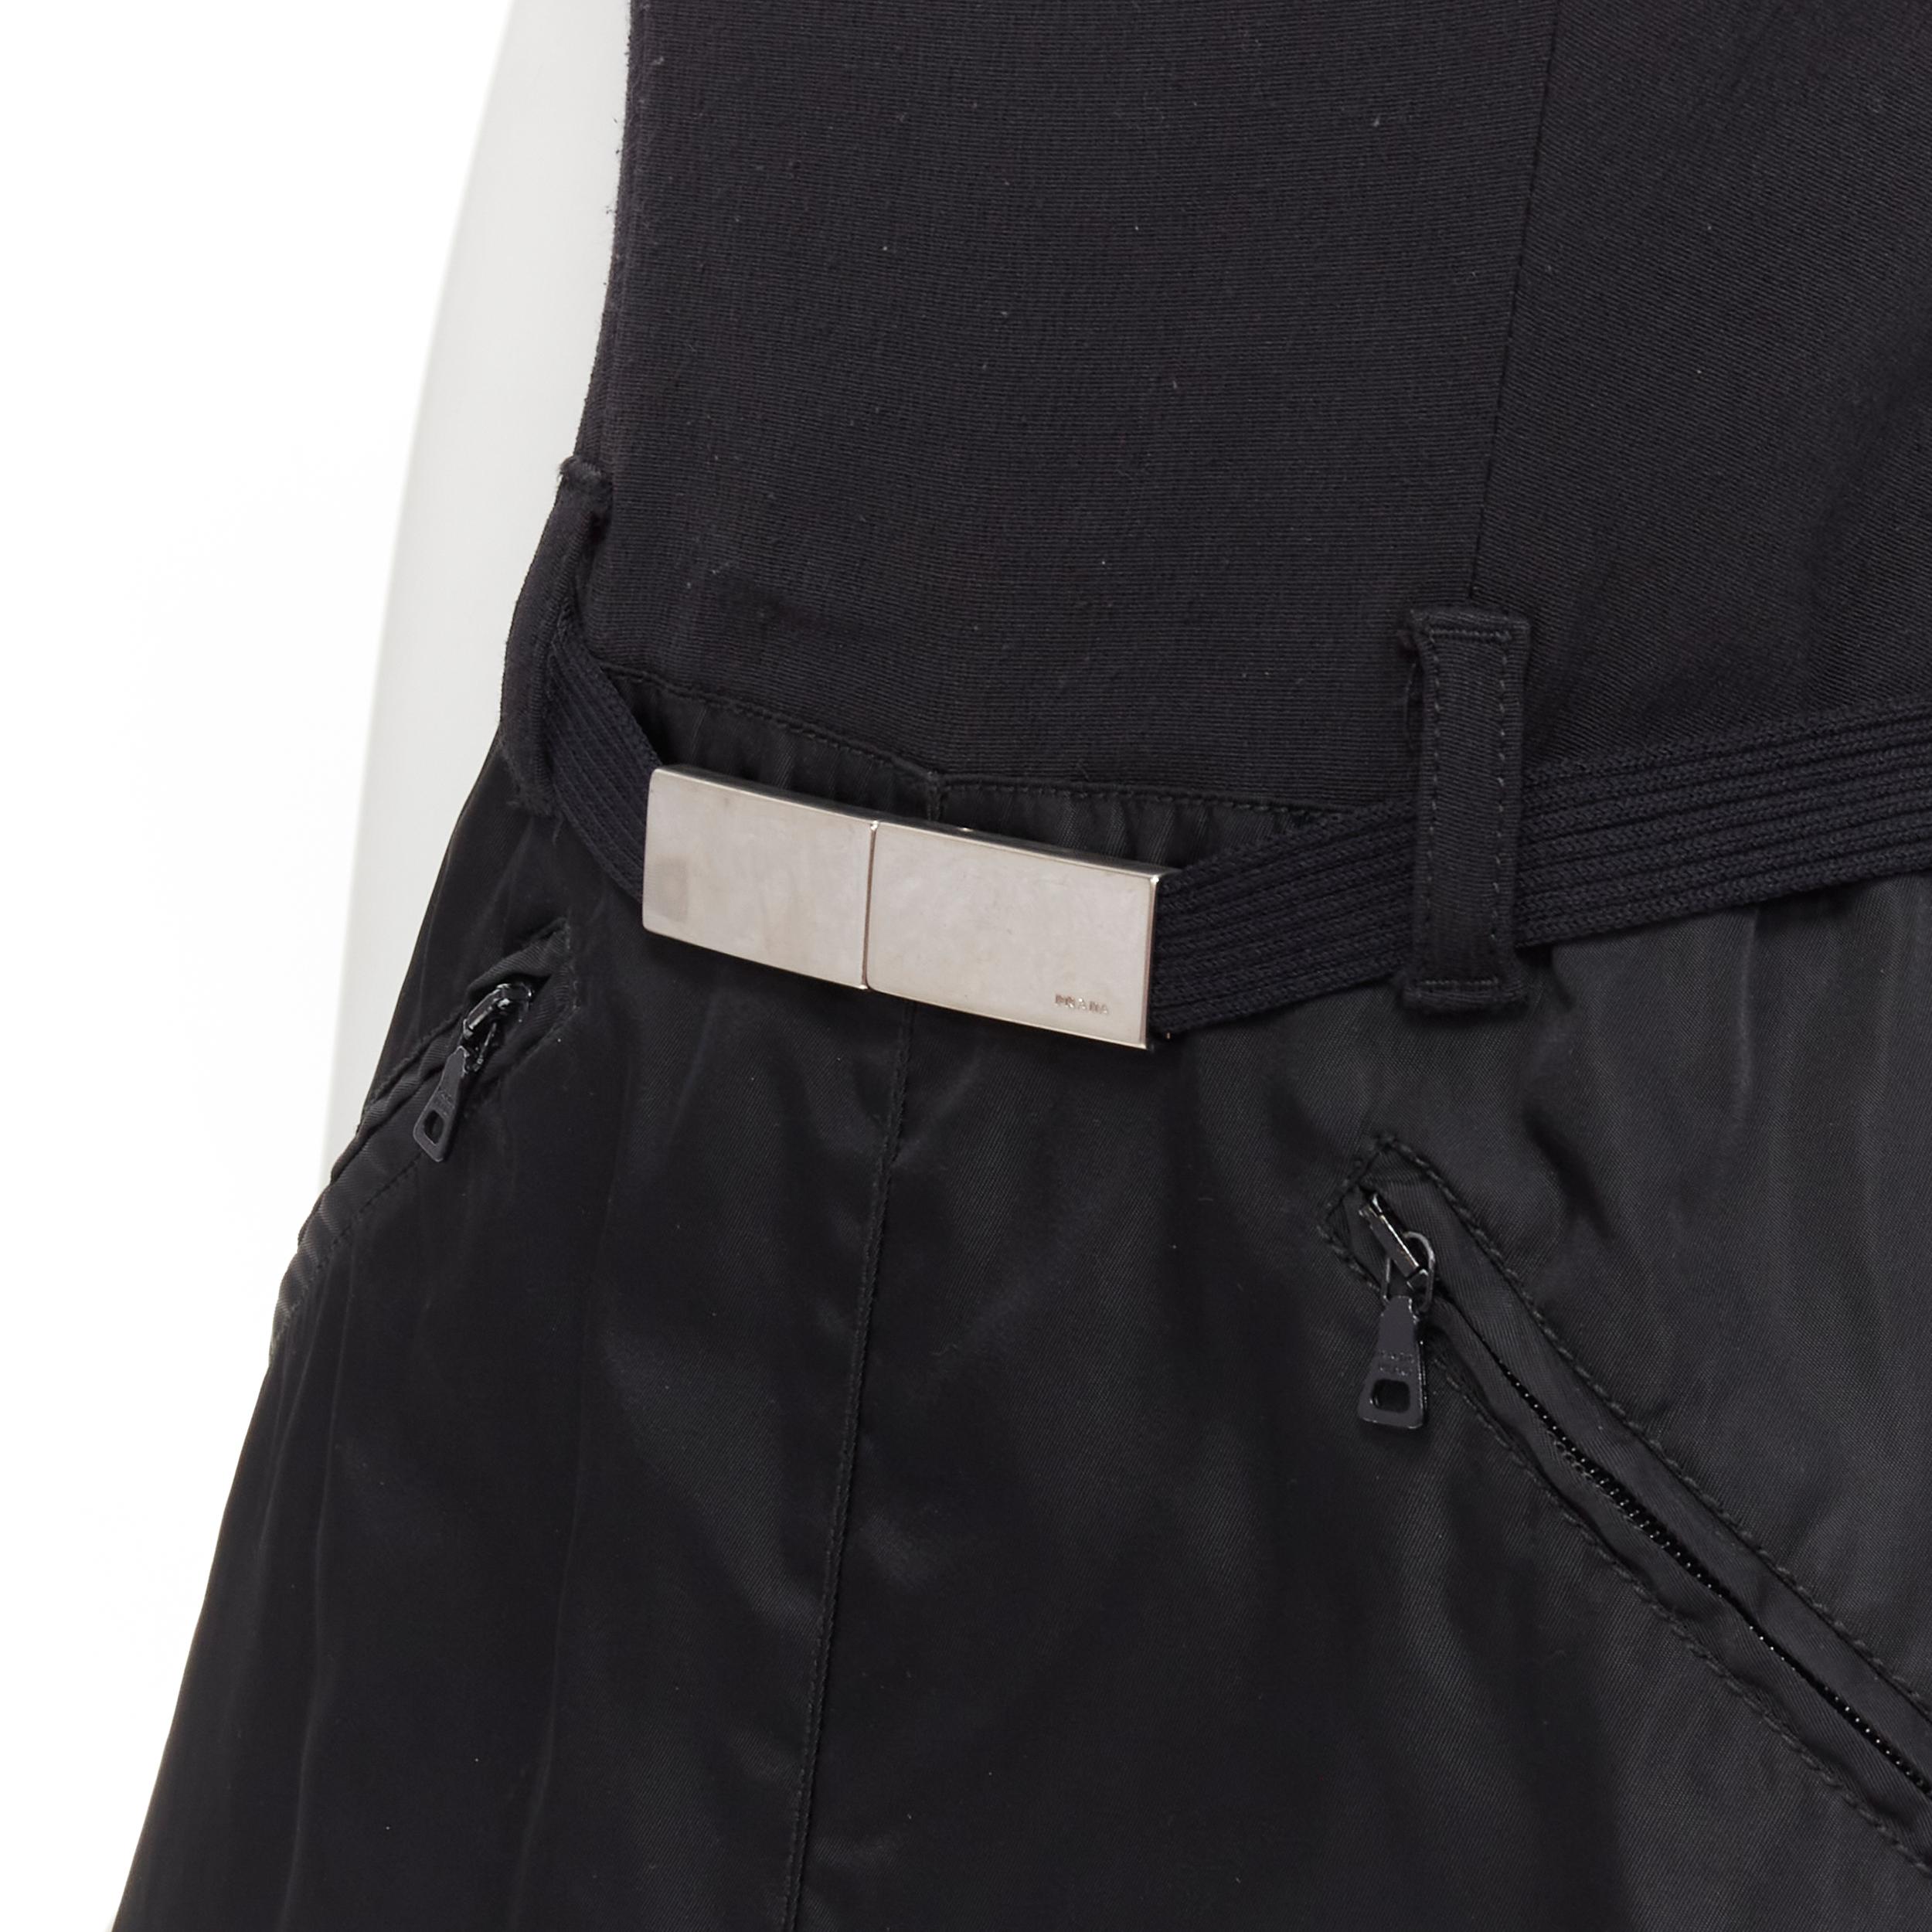 PRADA minimal black metal buckle belted nylon A-line skirt dress S 
Reference: GIYG/A00155 
Brand: Prada 
Designer: Miuccia Prada 
Material: Crepe 
Color: Black 
Pattern: Solid 
Closure: Zip 
Extra Detail: Black crepe upper. Ribbed metal buckle